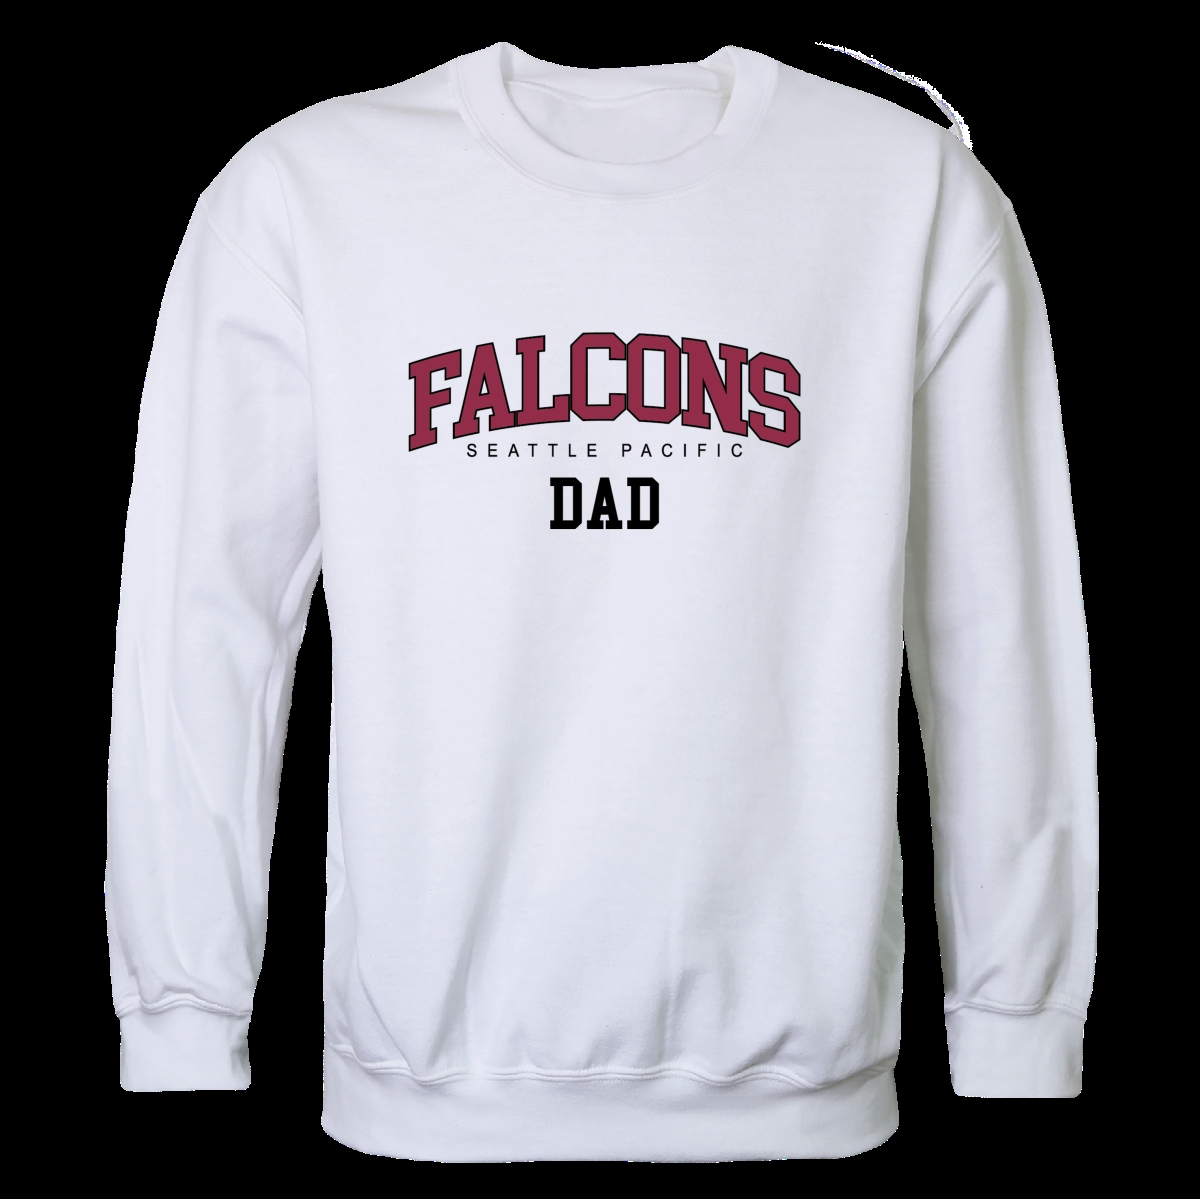 W Republic 562-670-WHT-02 Seattle Pacific University Falcons Dad Crewneck Sweatshirt&#44; White - Medium